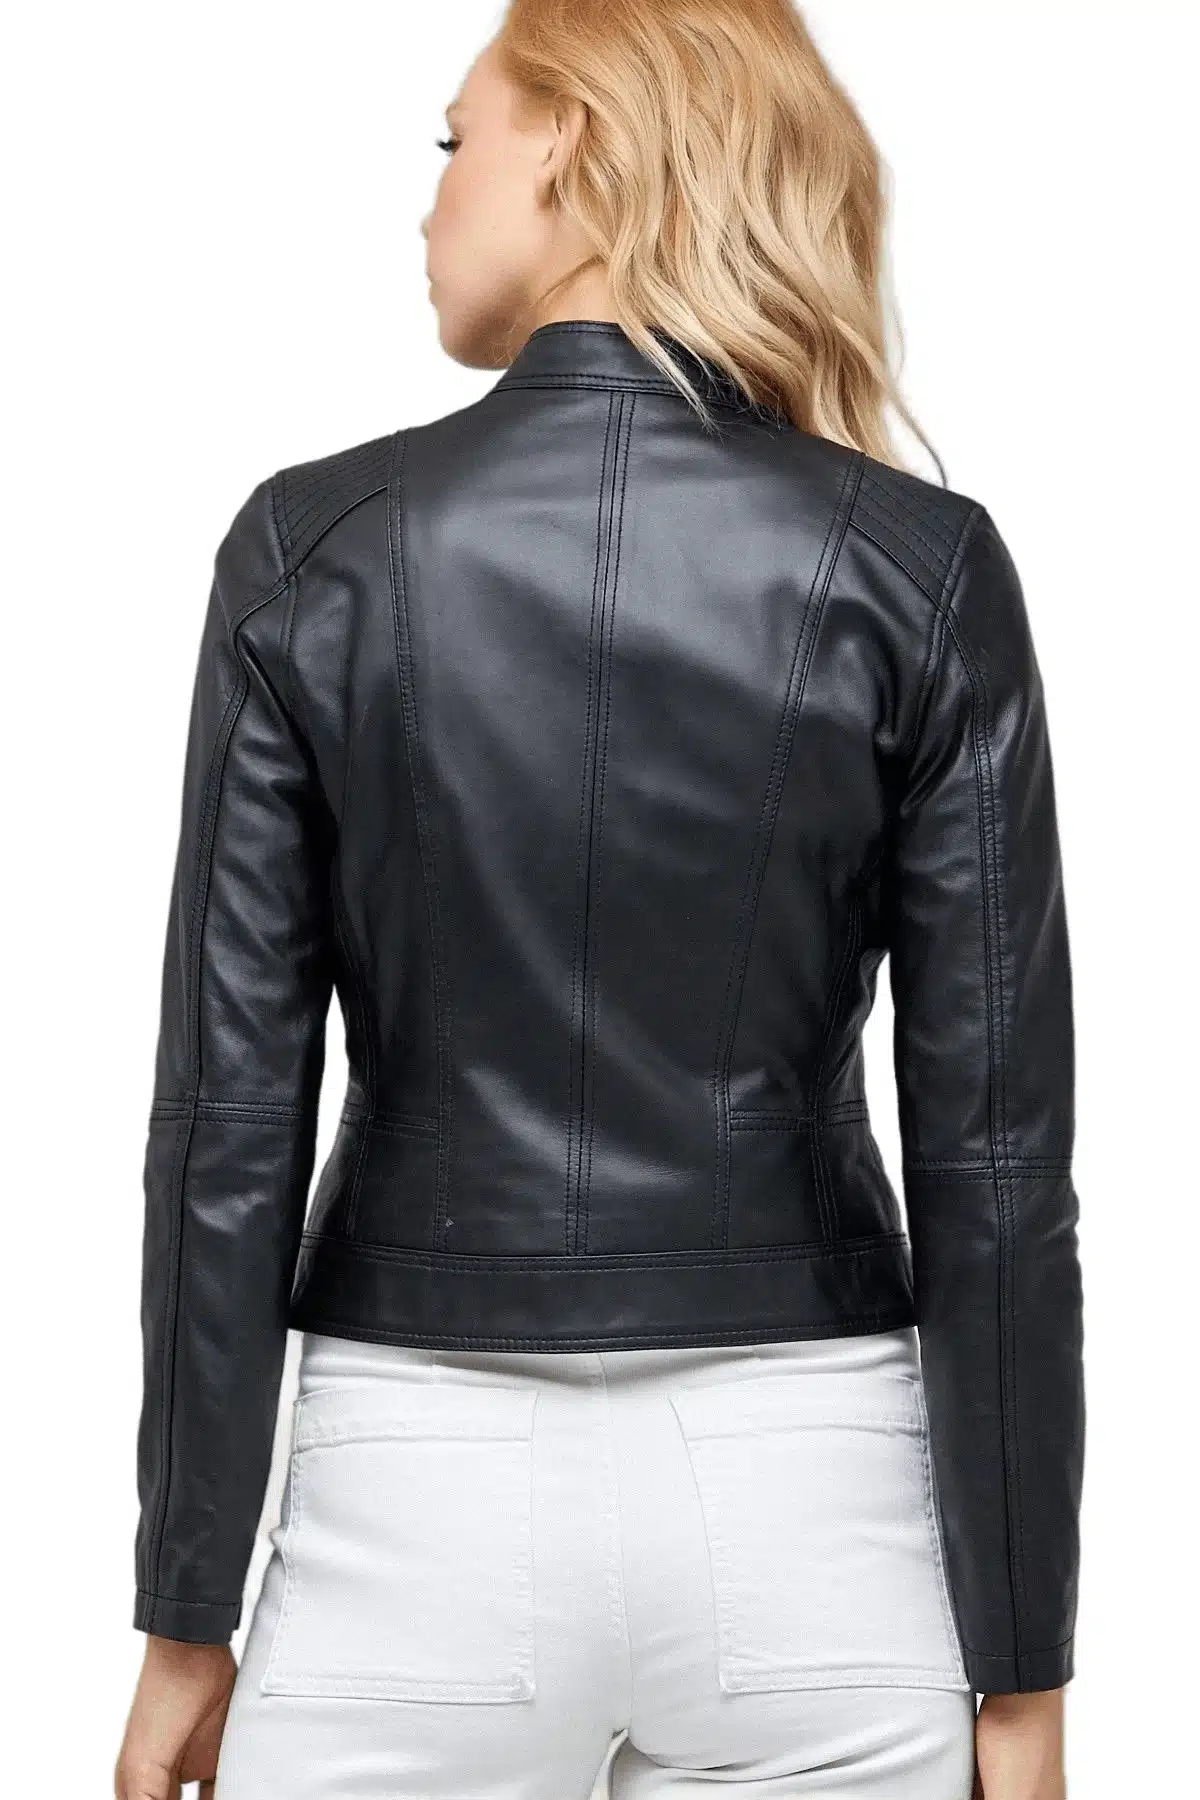 Eira Women's 100 % Real Black Leather Biker Jacket